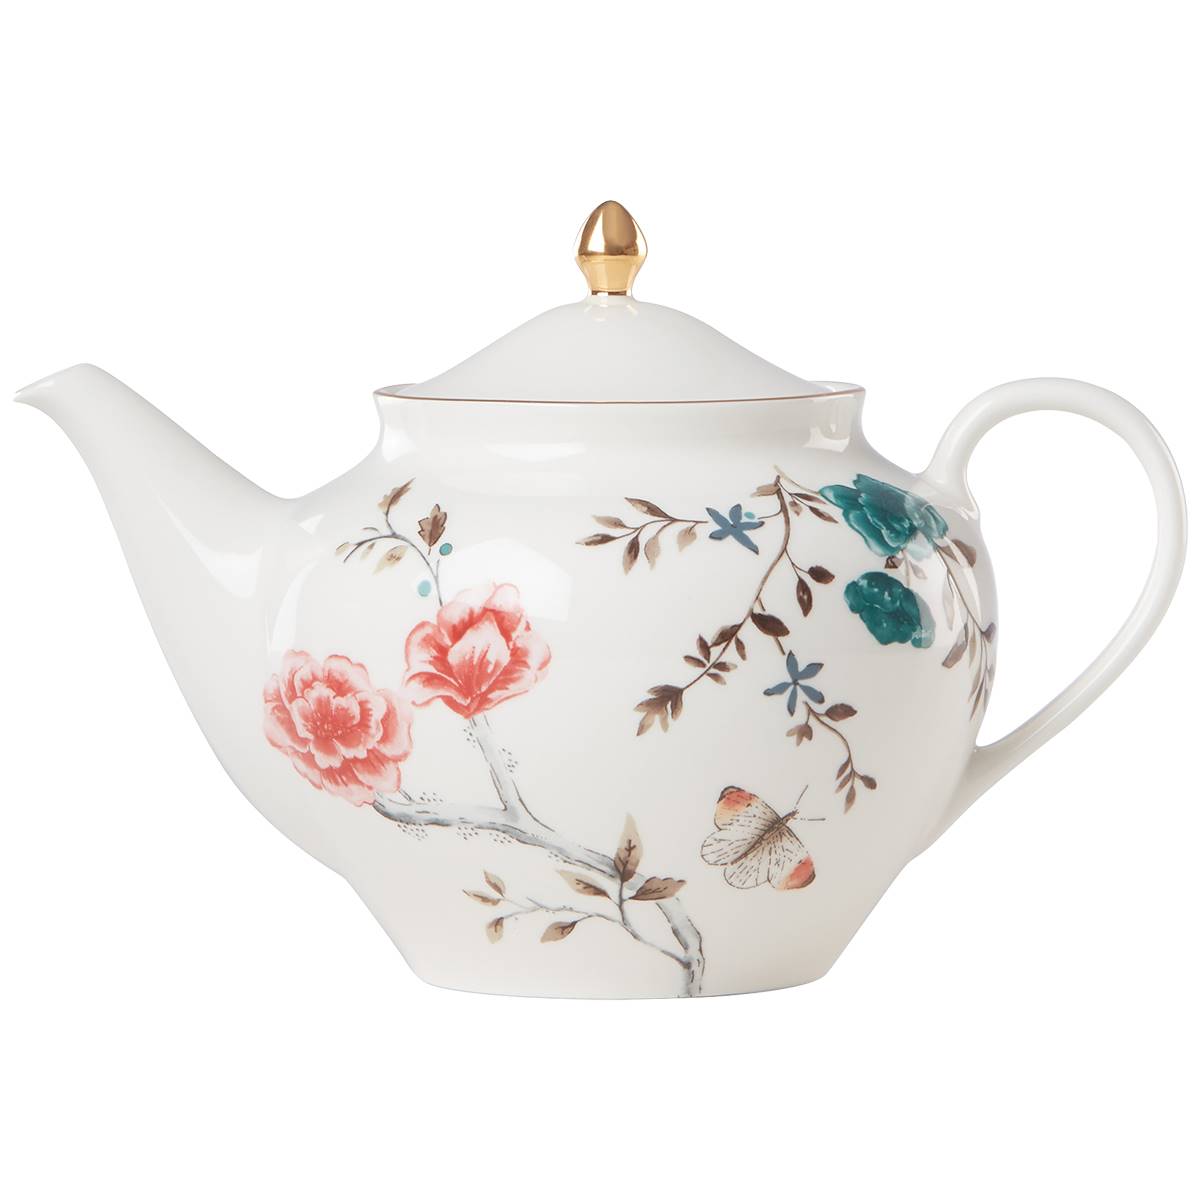 Lenox(R) Sprig & Vine(tm) Floral Teapot